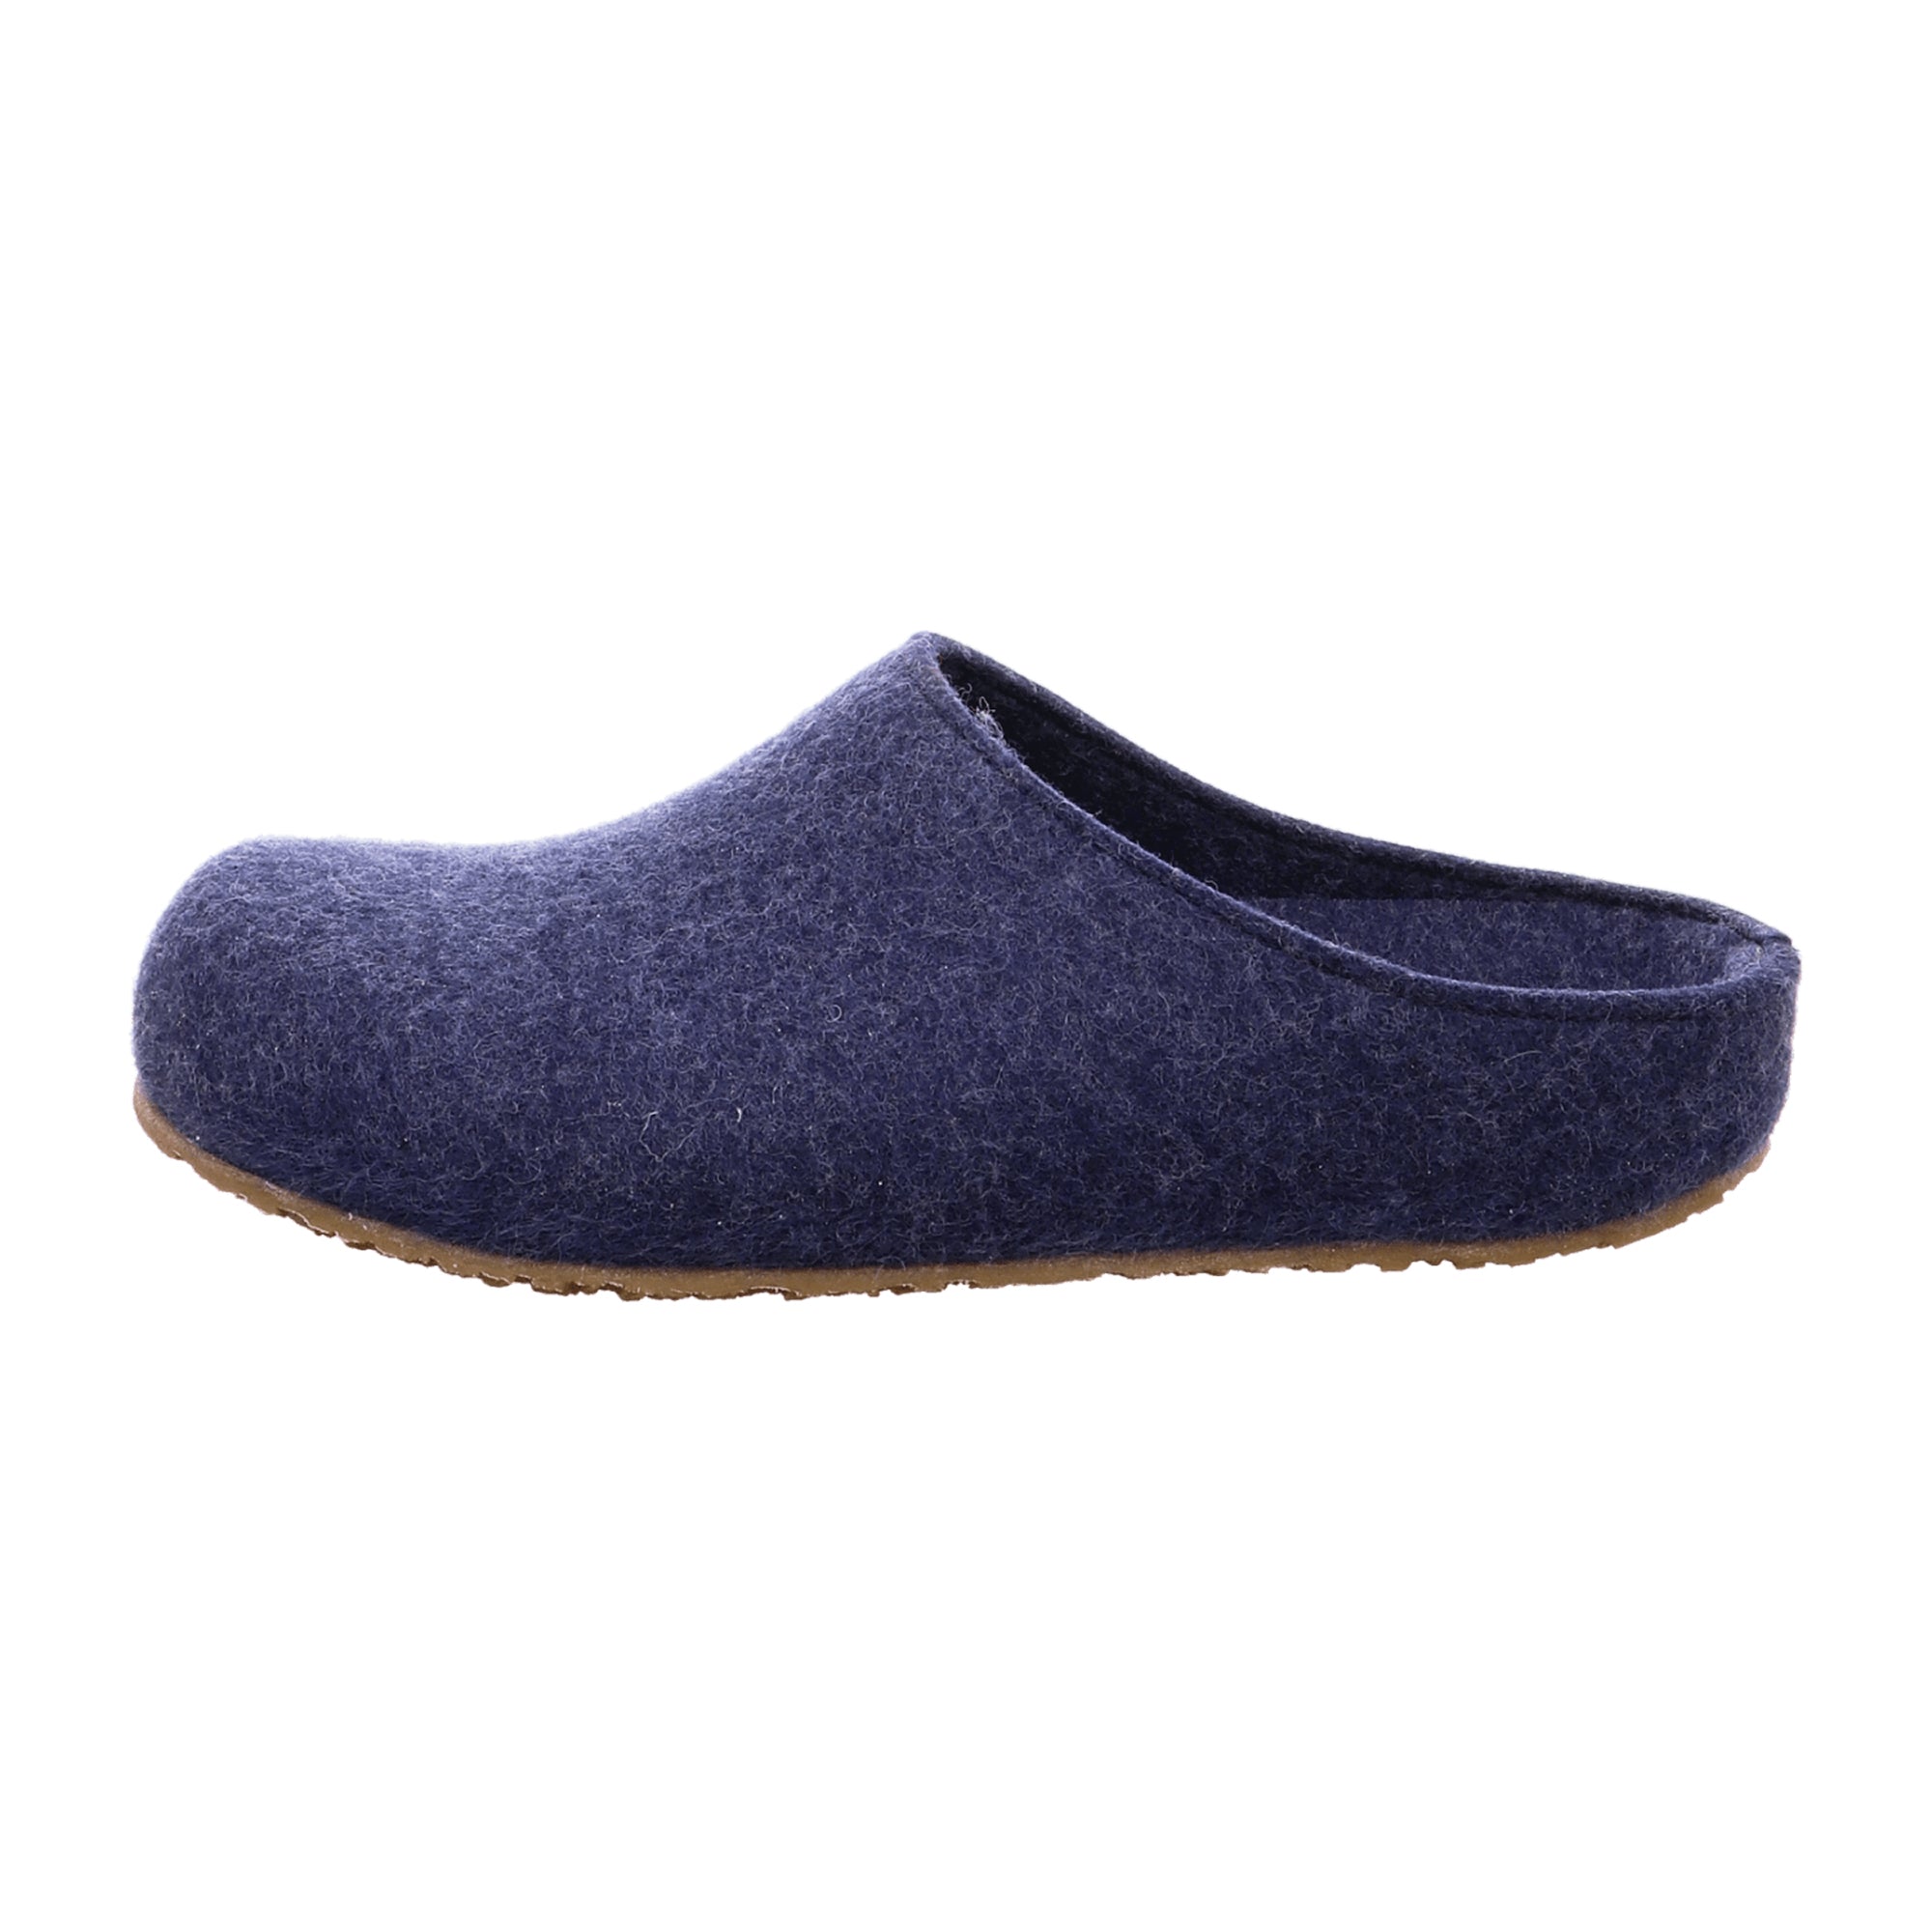 Haflinger Michl Men's Slippers - Stylish Blue Wool Comfort